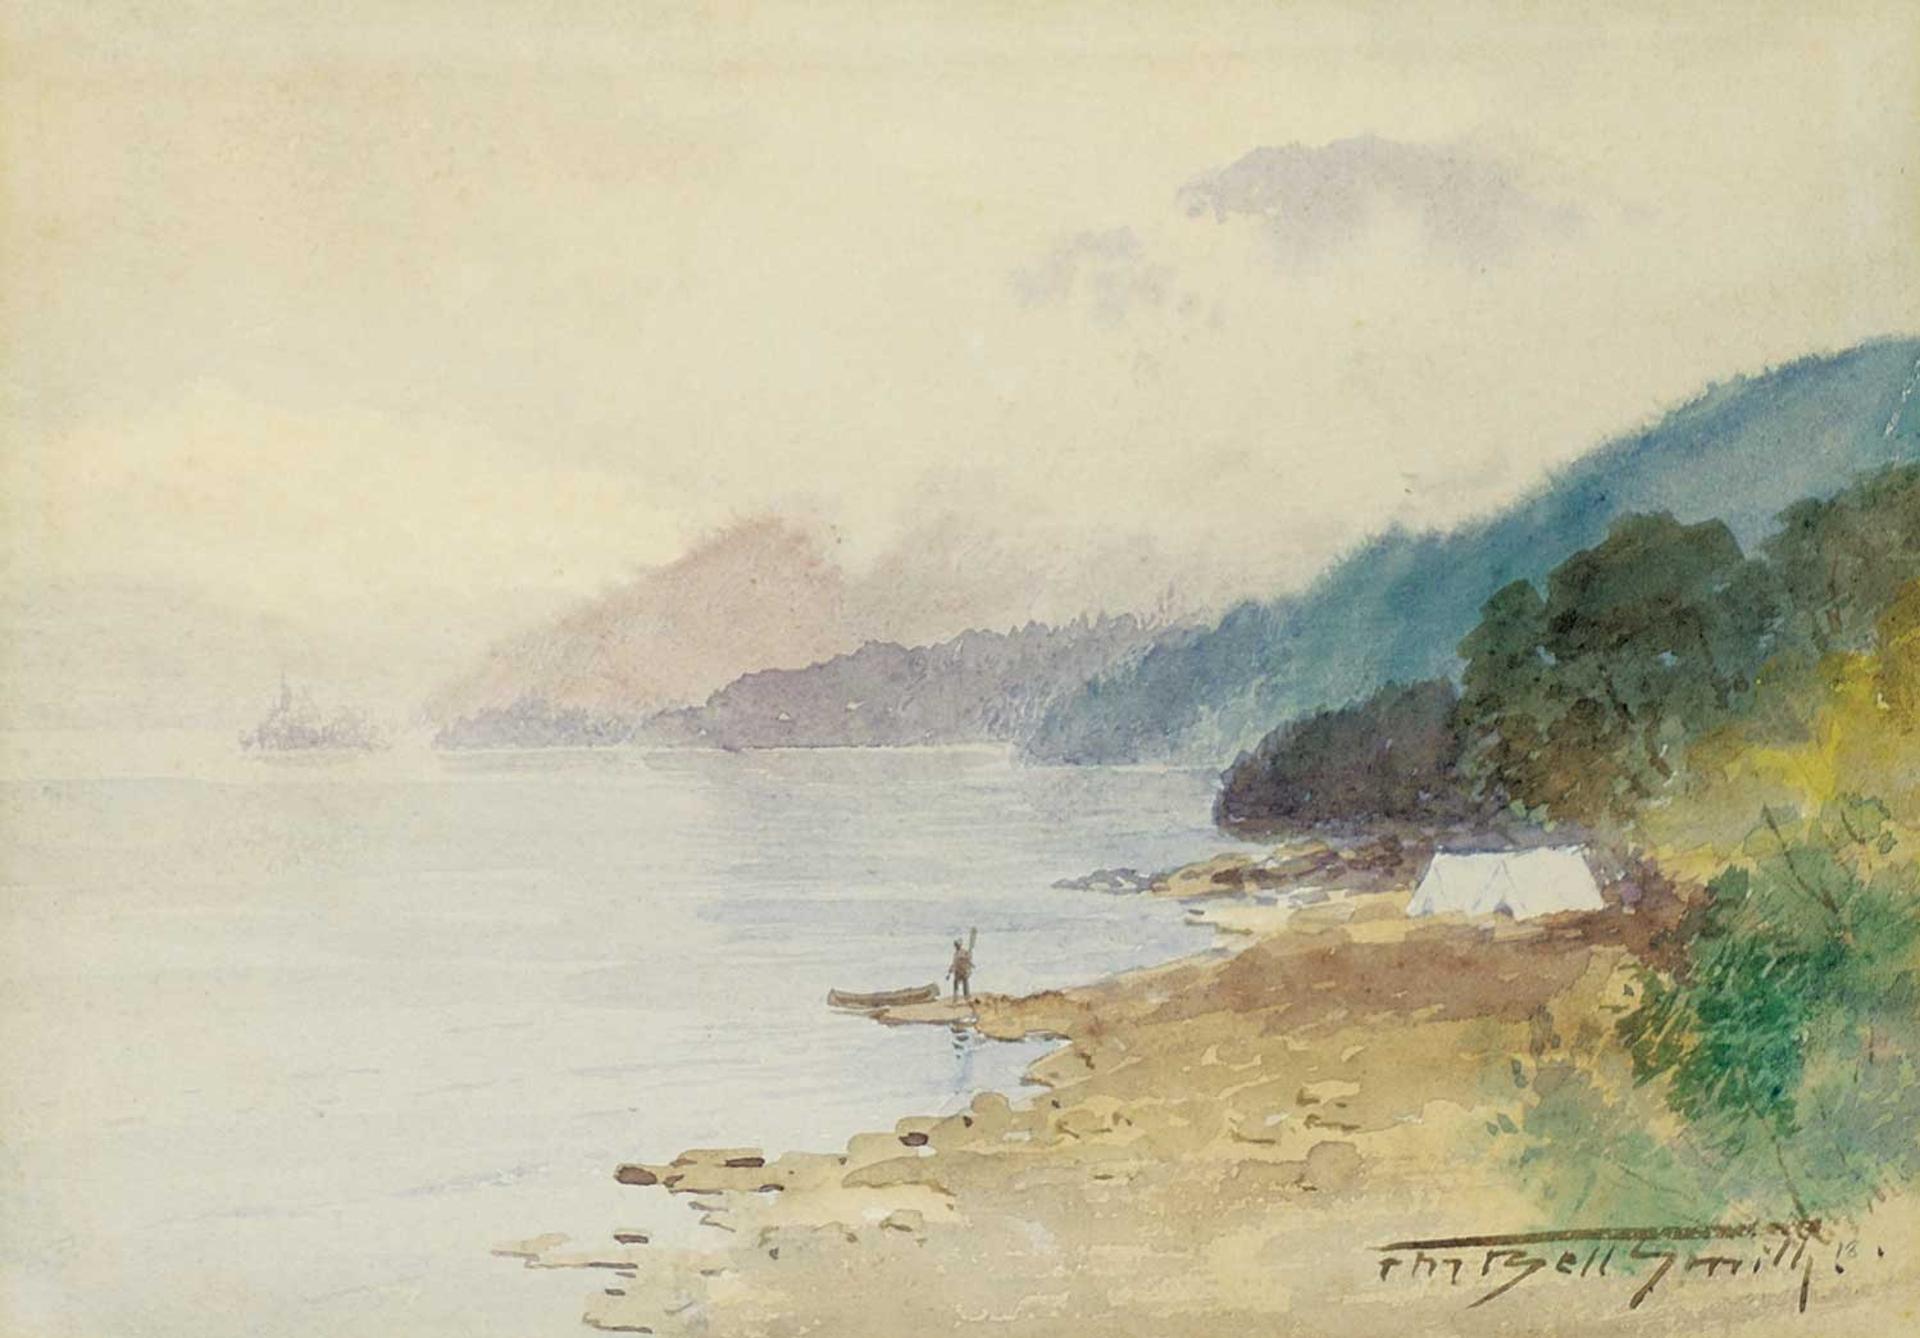 Frederic Martlett Bell-Smith (1846-1923) - Early Morning, Shuswap Lake